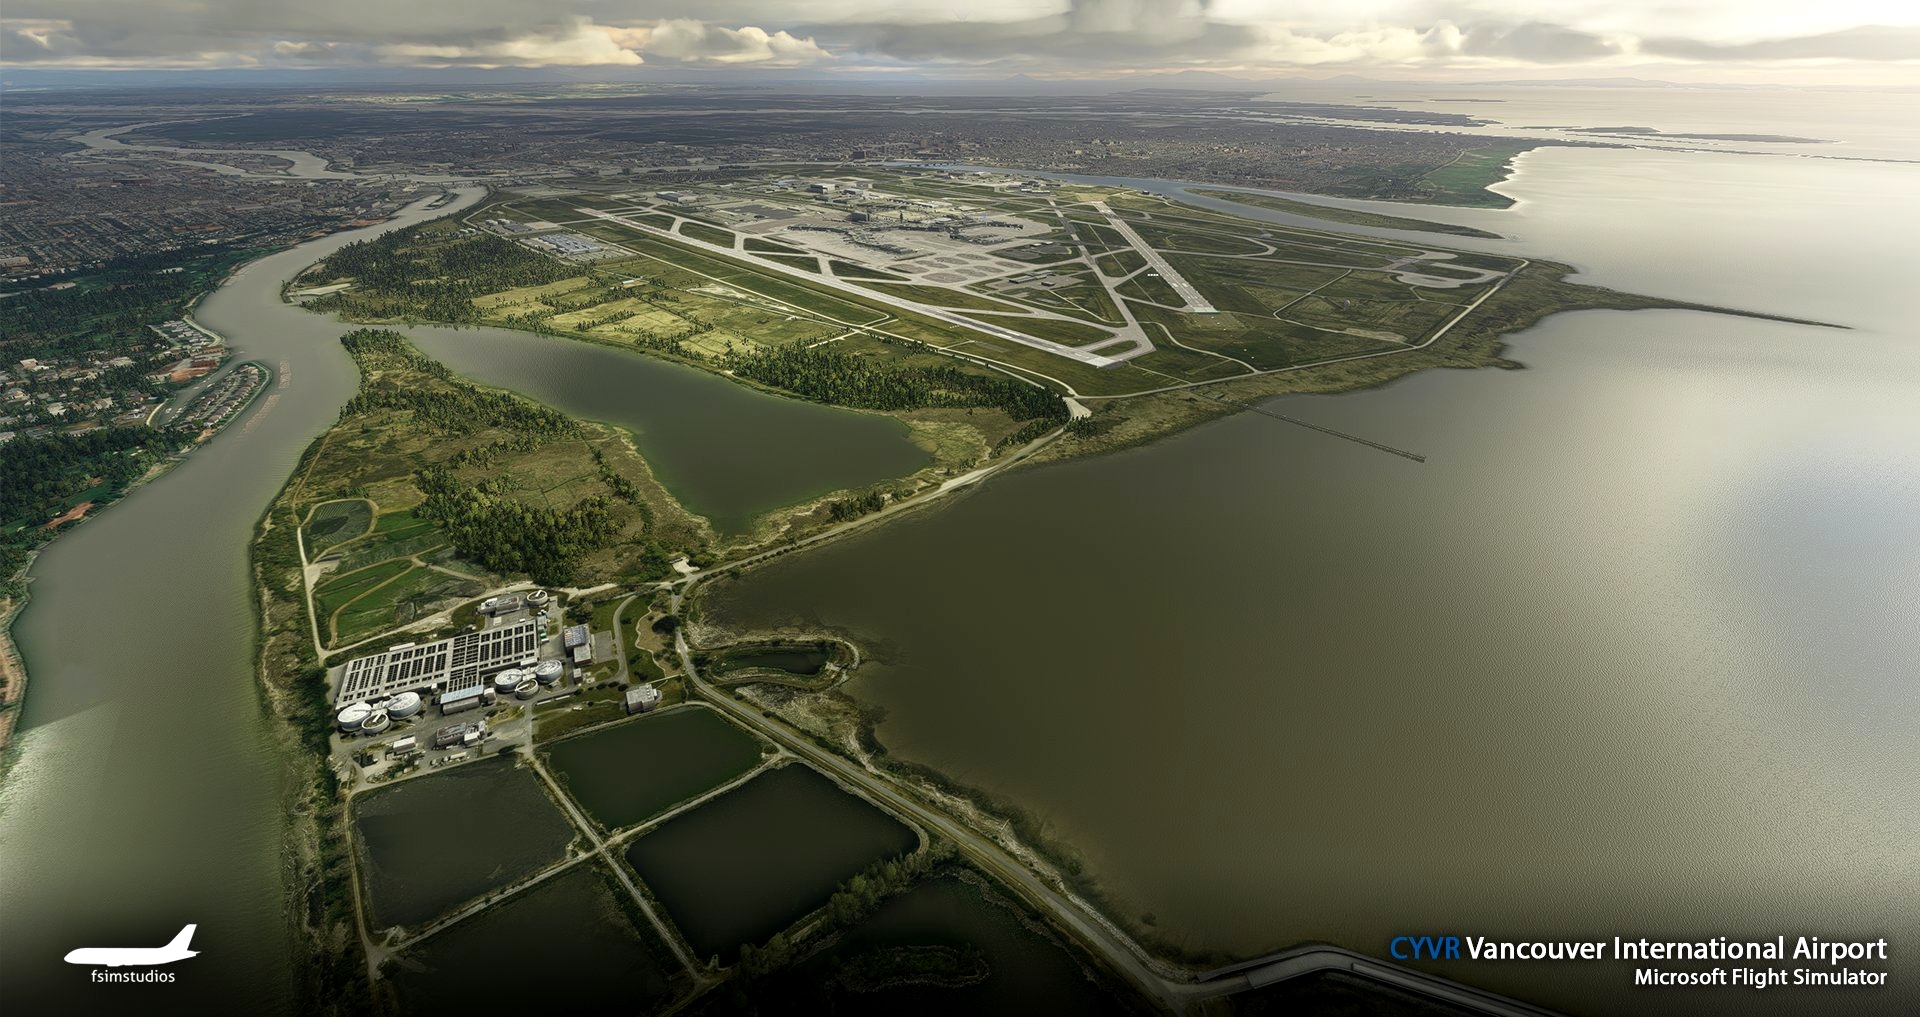 CYVR Vancouver International Airport Microsoft Flight Simulator